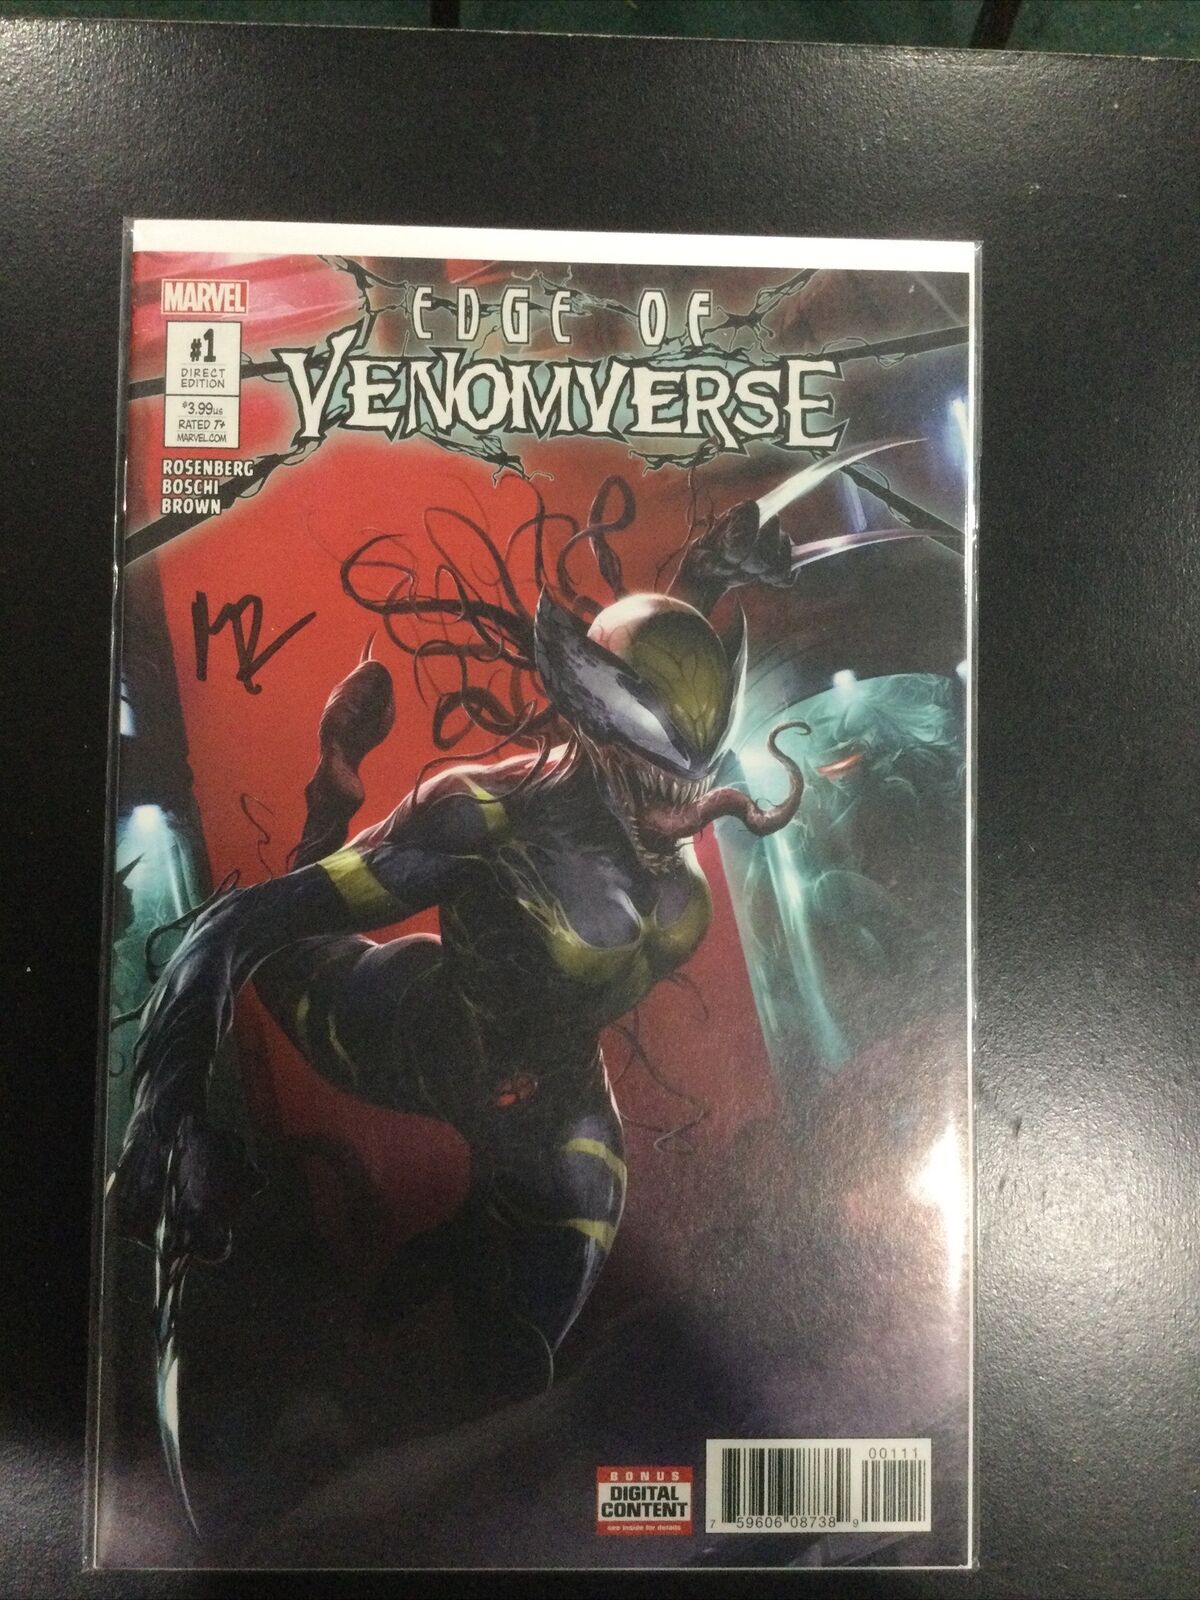 2017 Edge of Venomverse  #1 Midtown Comics COA signed by Matthew Rosenberg